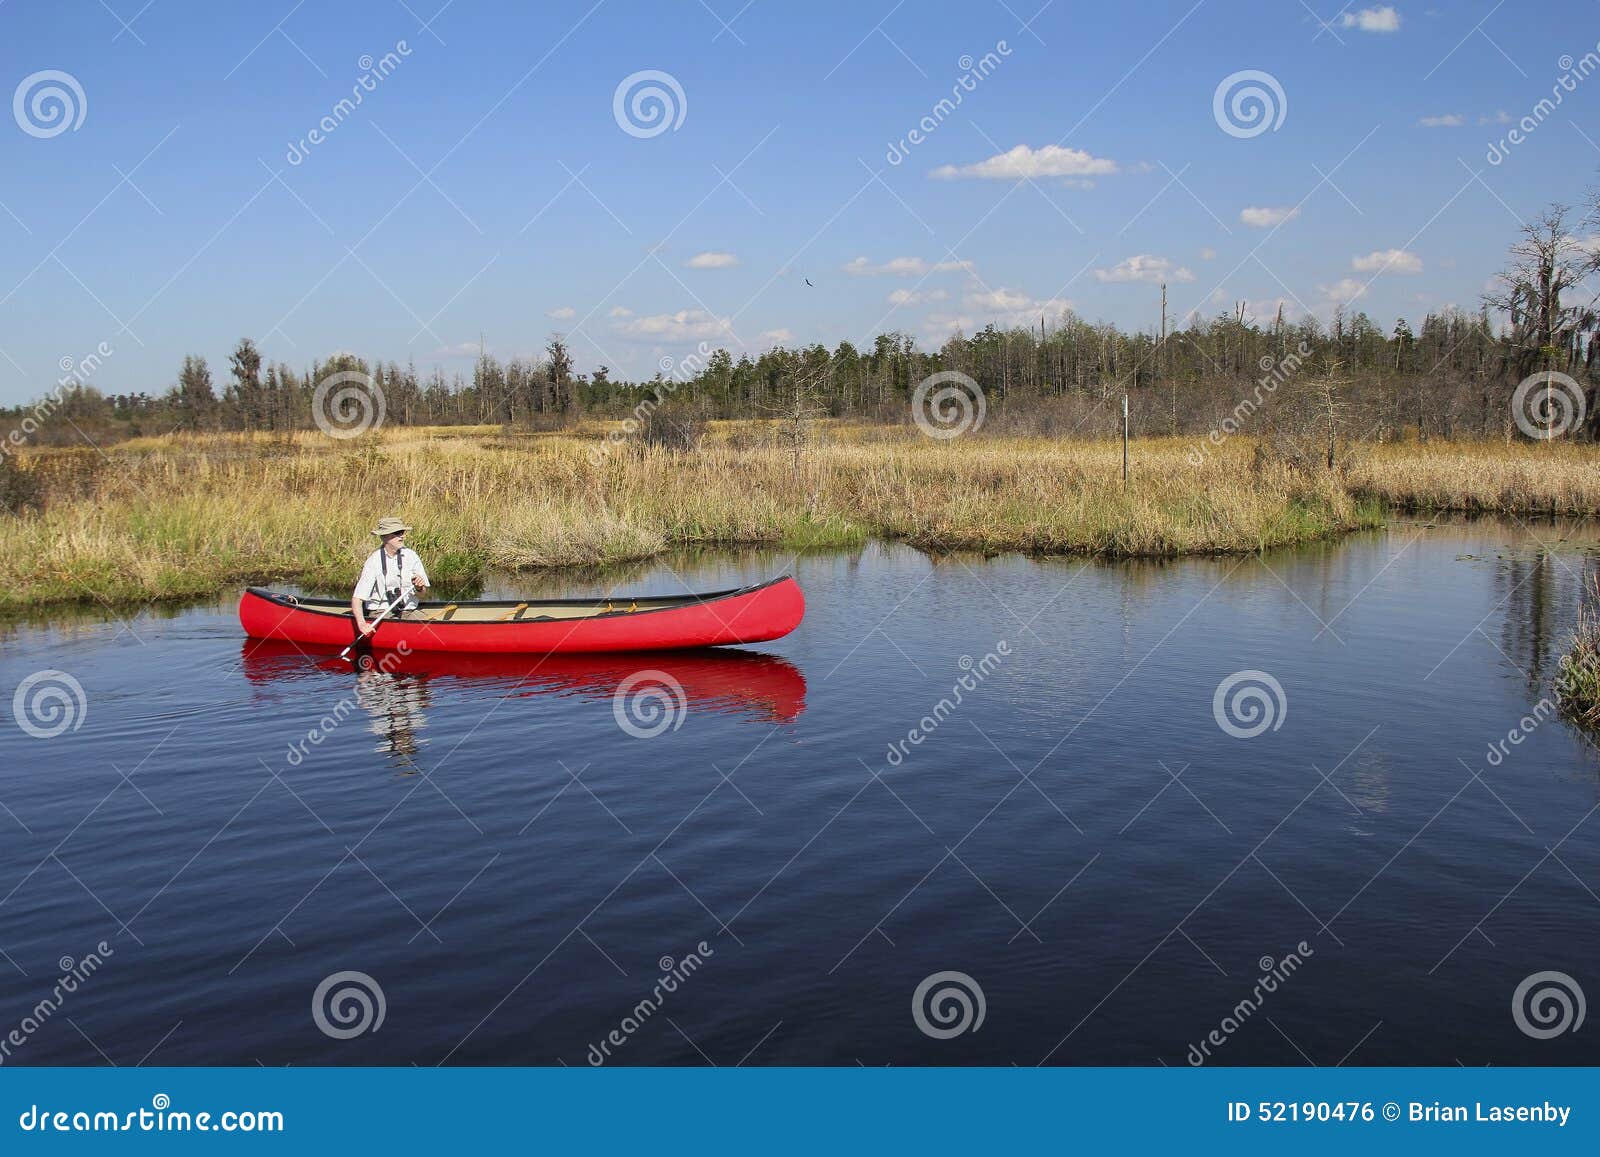 canoeing in the okefenokee swamp -georgia